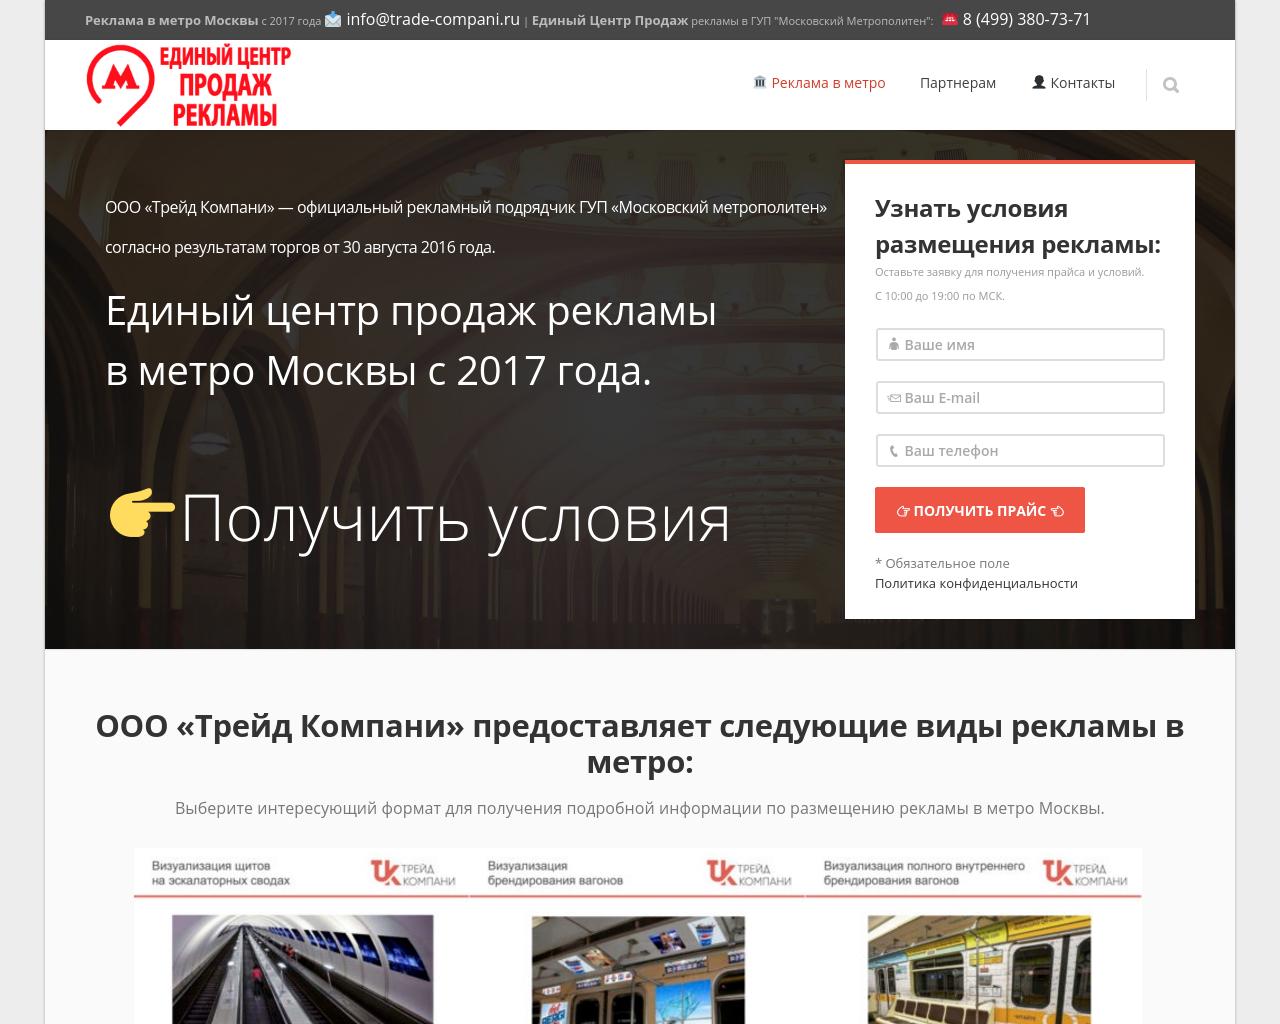 Изображение сайта trade-compani.ru в разрешении 1280x1024